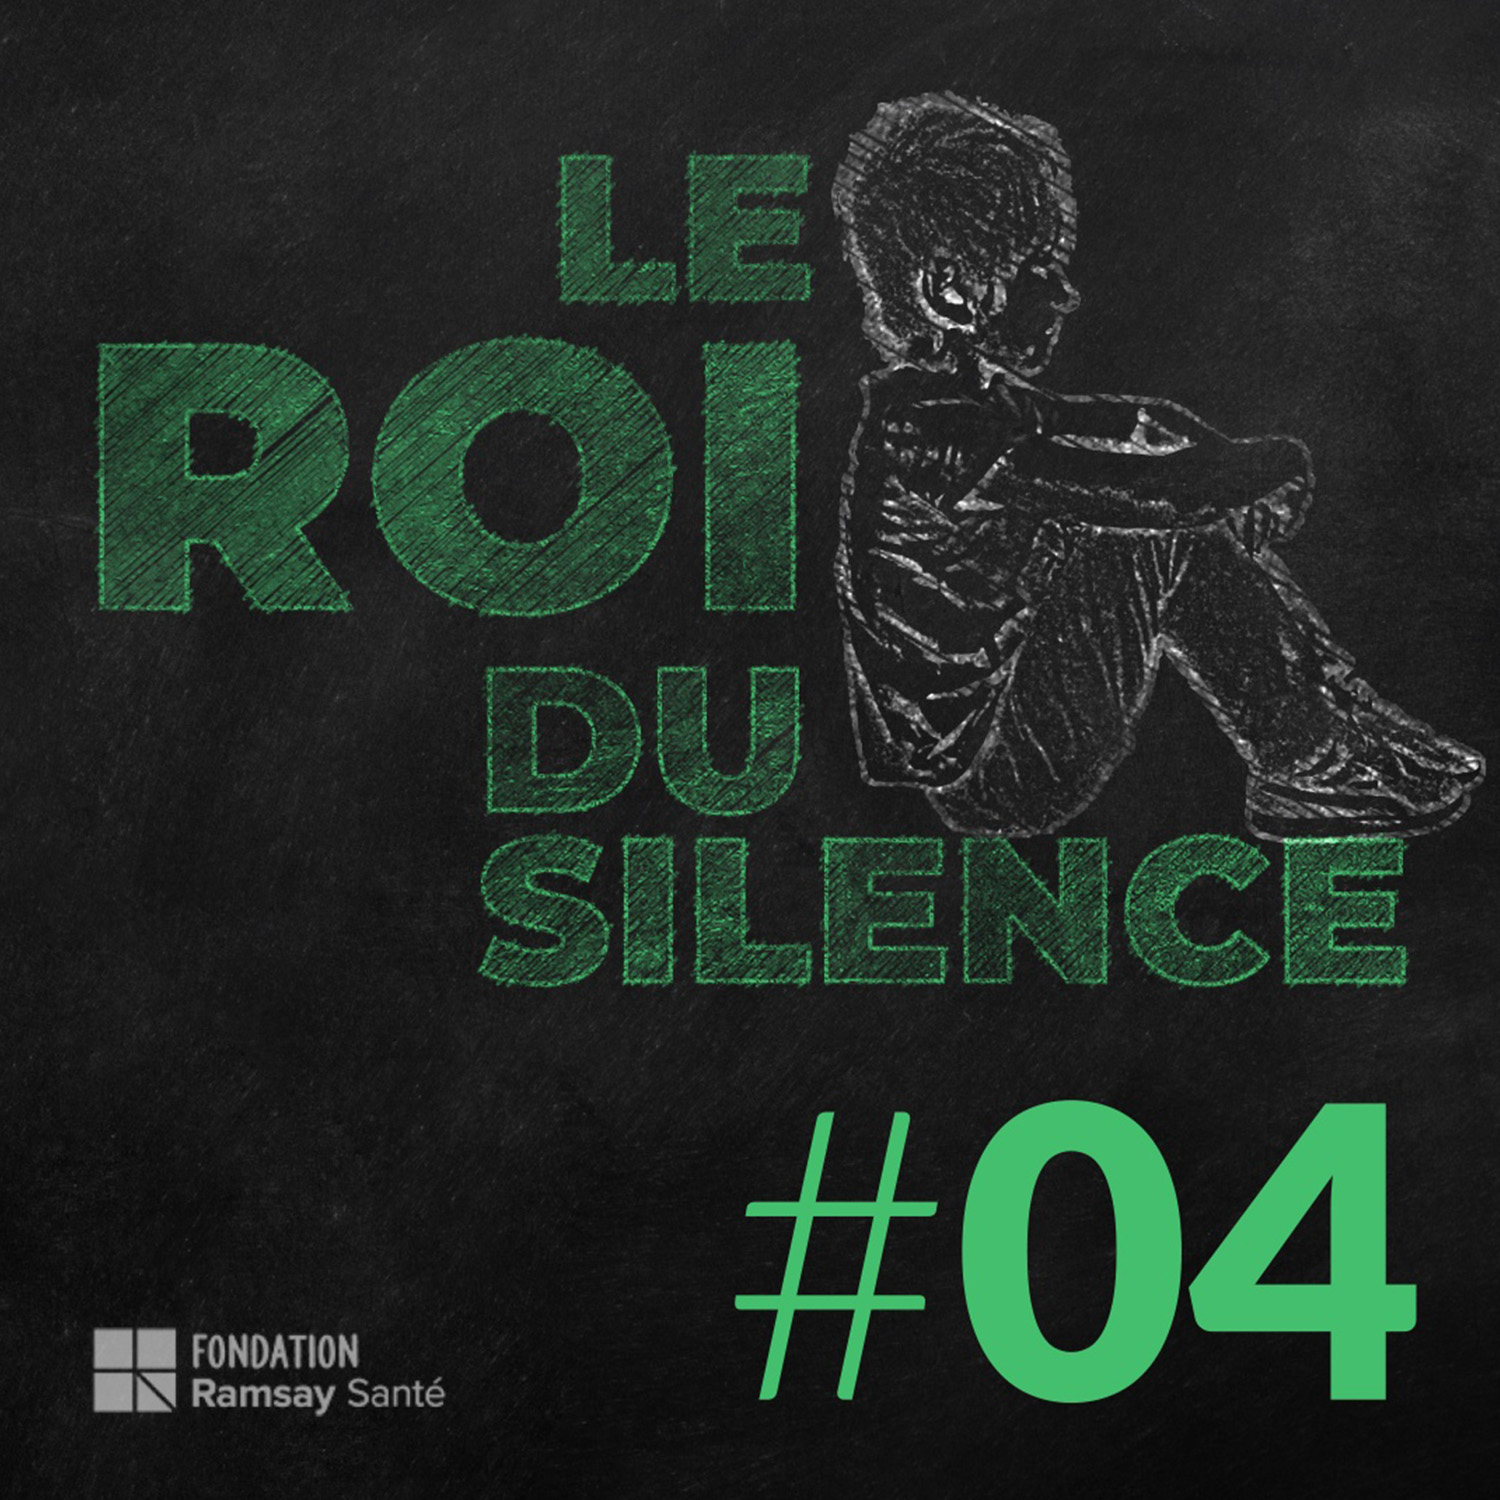 Artwork for podcast Le Roi du Silence